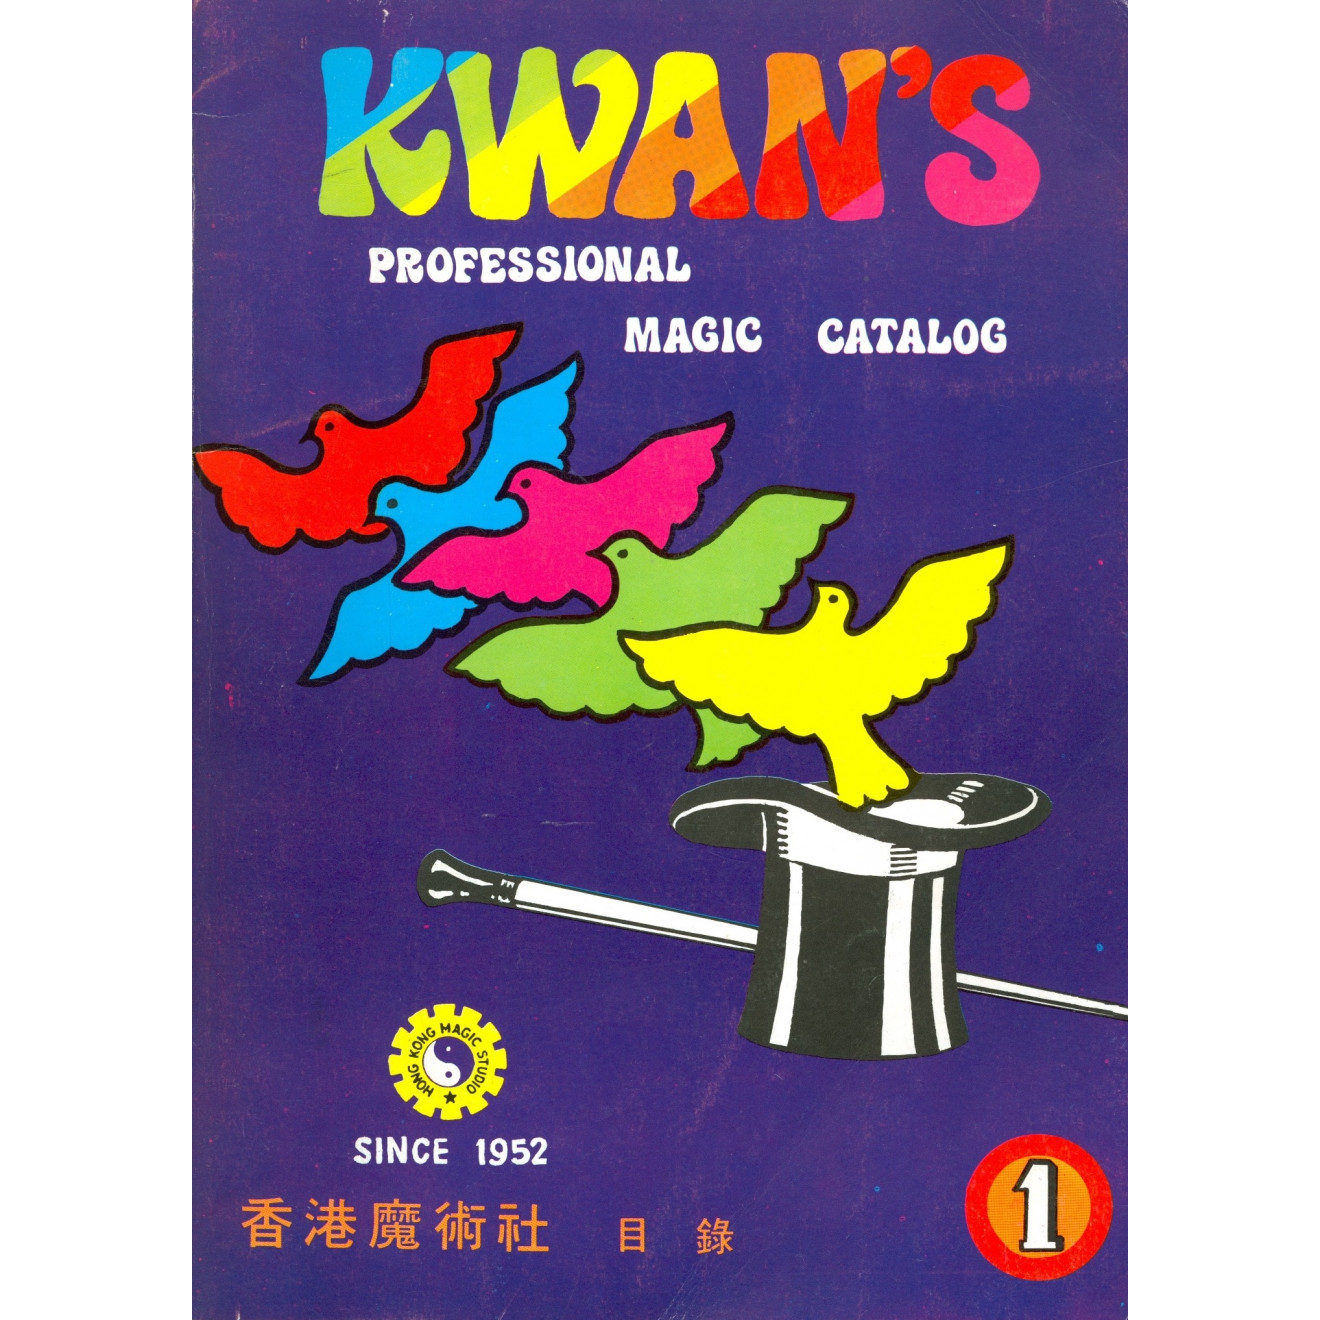 Kwan's Professional Magic Catalog